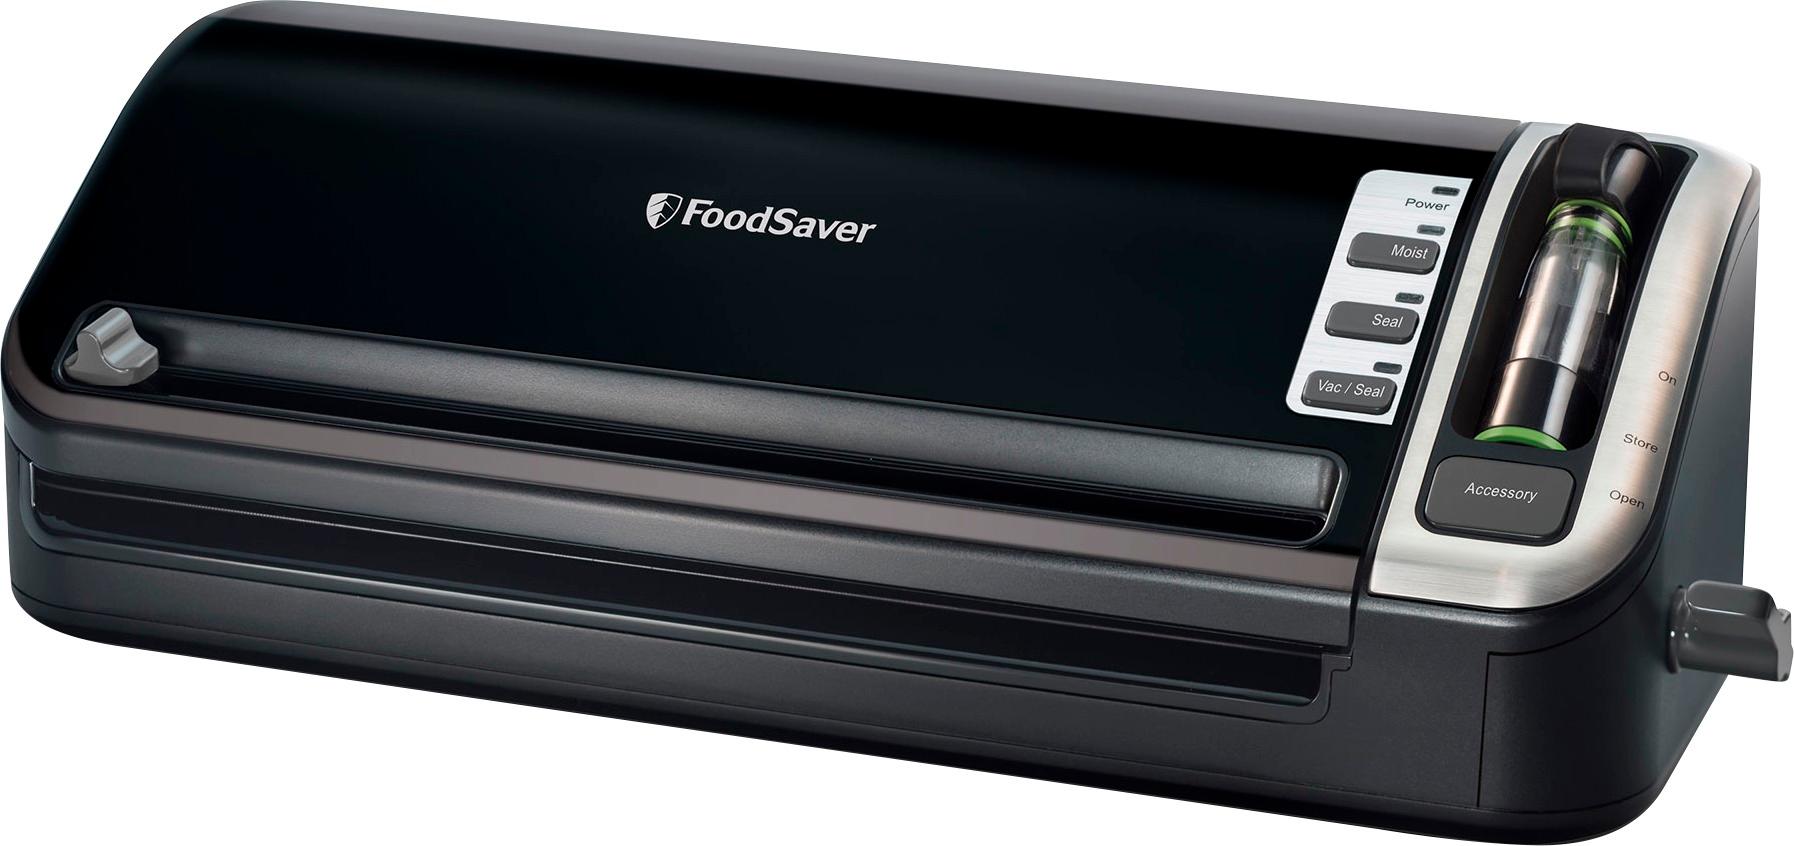 Food Saver Brand vacuum sealer FM 2900 New never opened grey and black  handheld